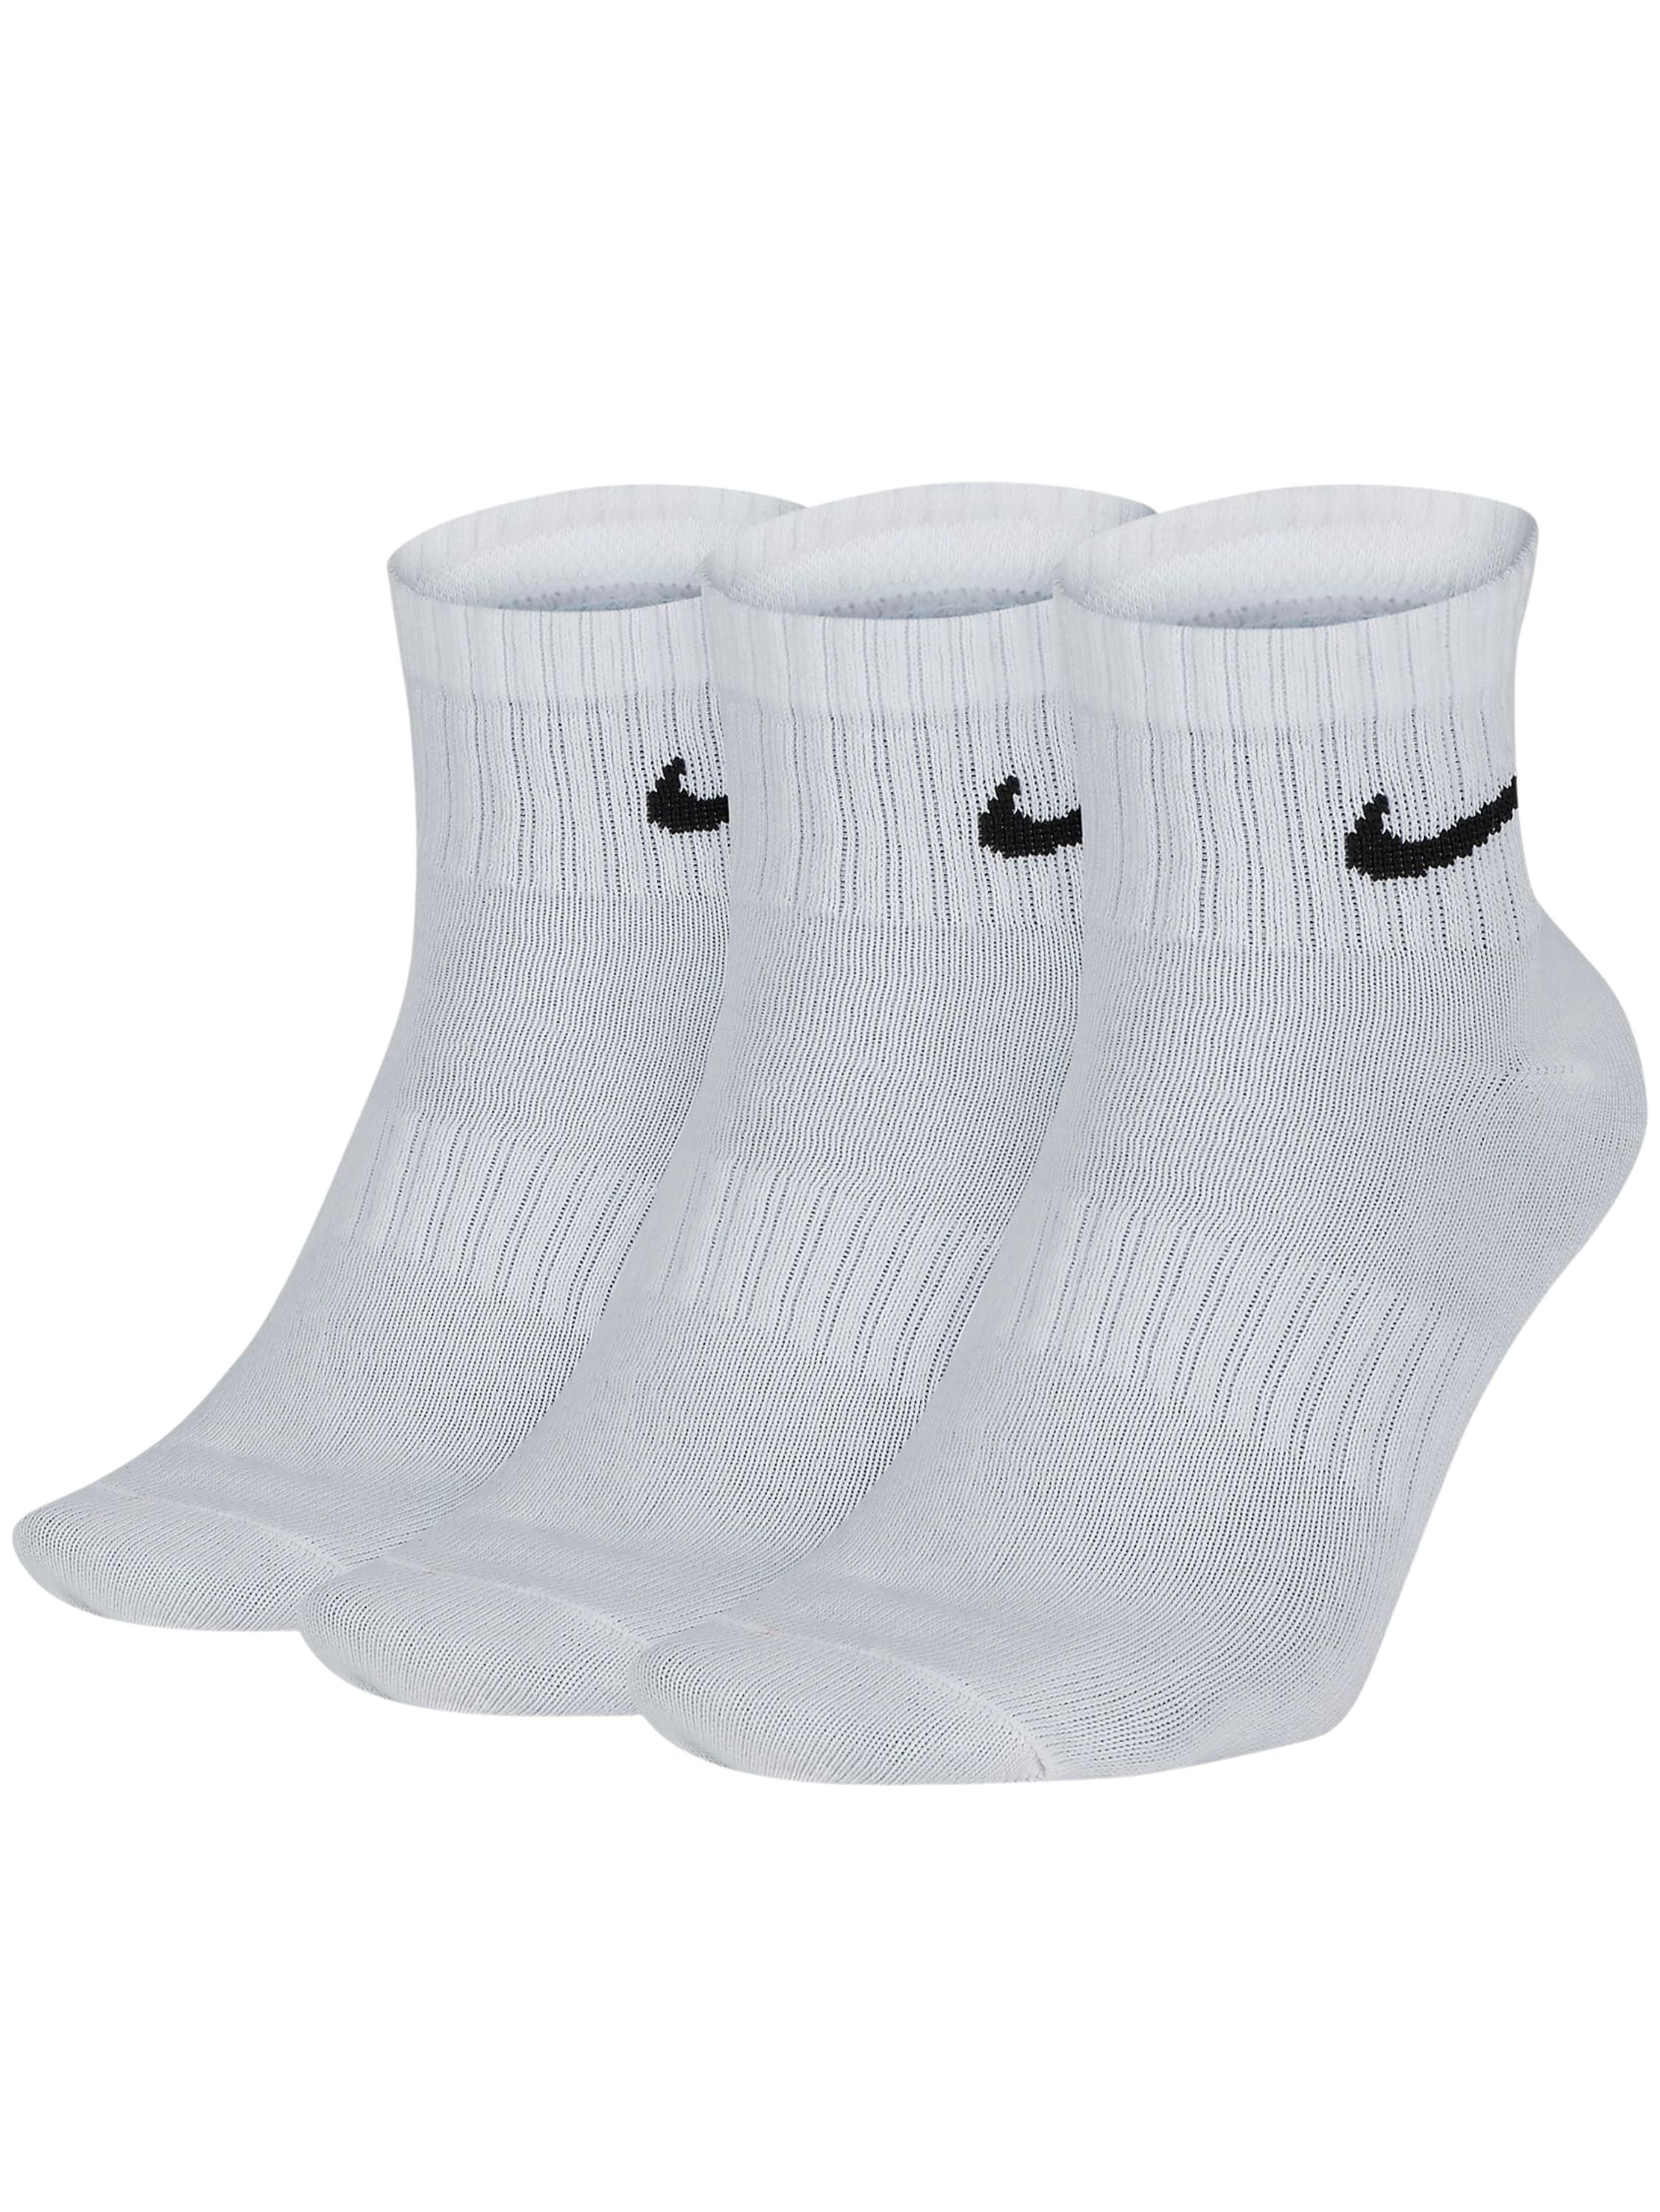 Nike | Mens Everyday Ankle Socks (3 Pack)